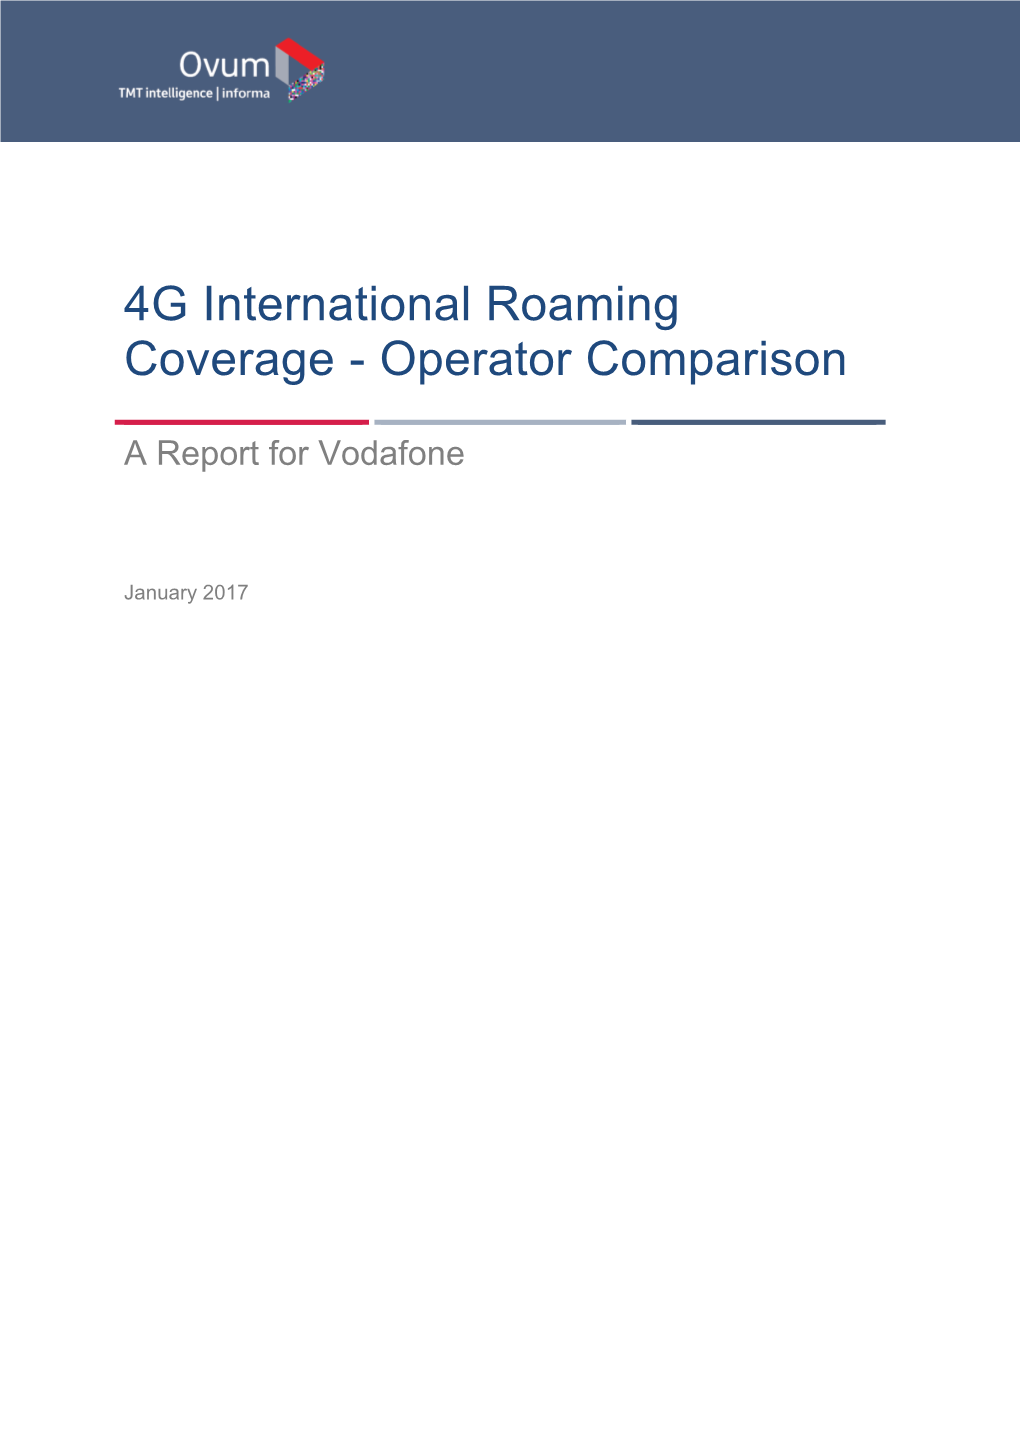 4G International Roaming Coverage - Operator Comparison